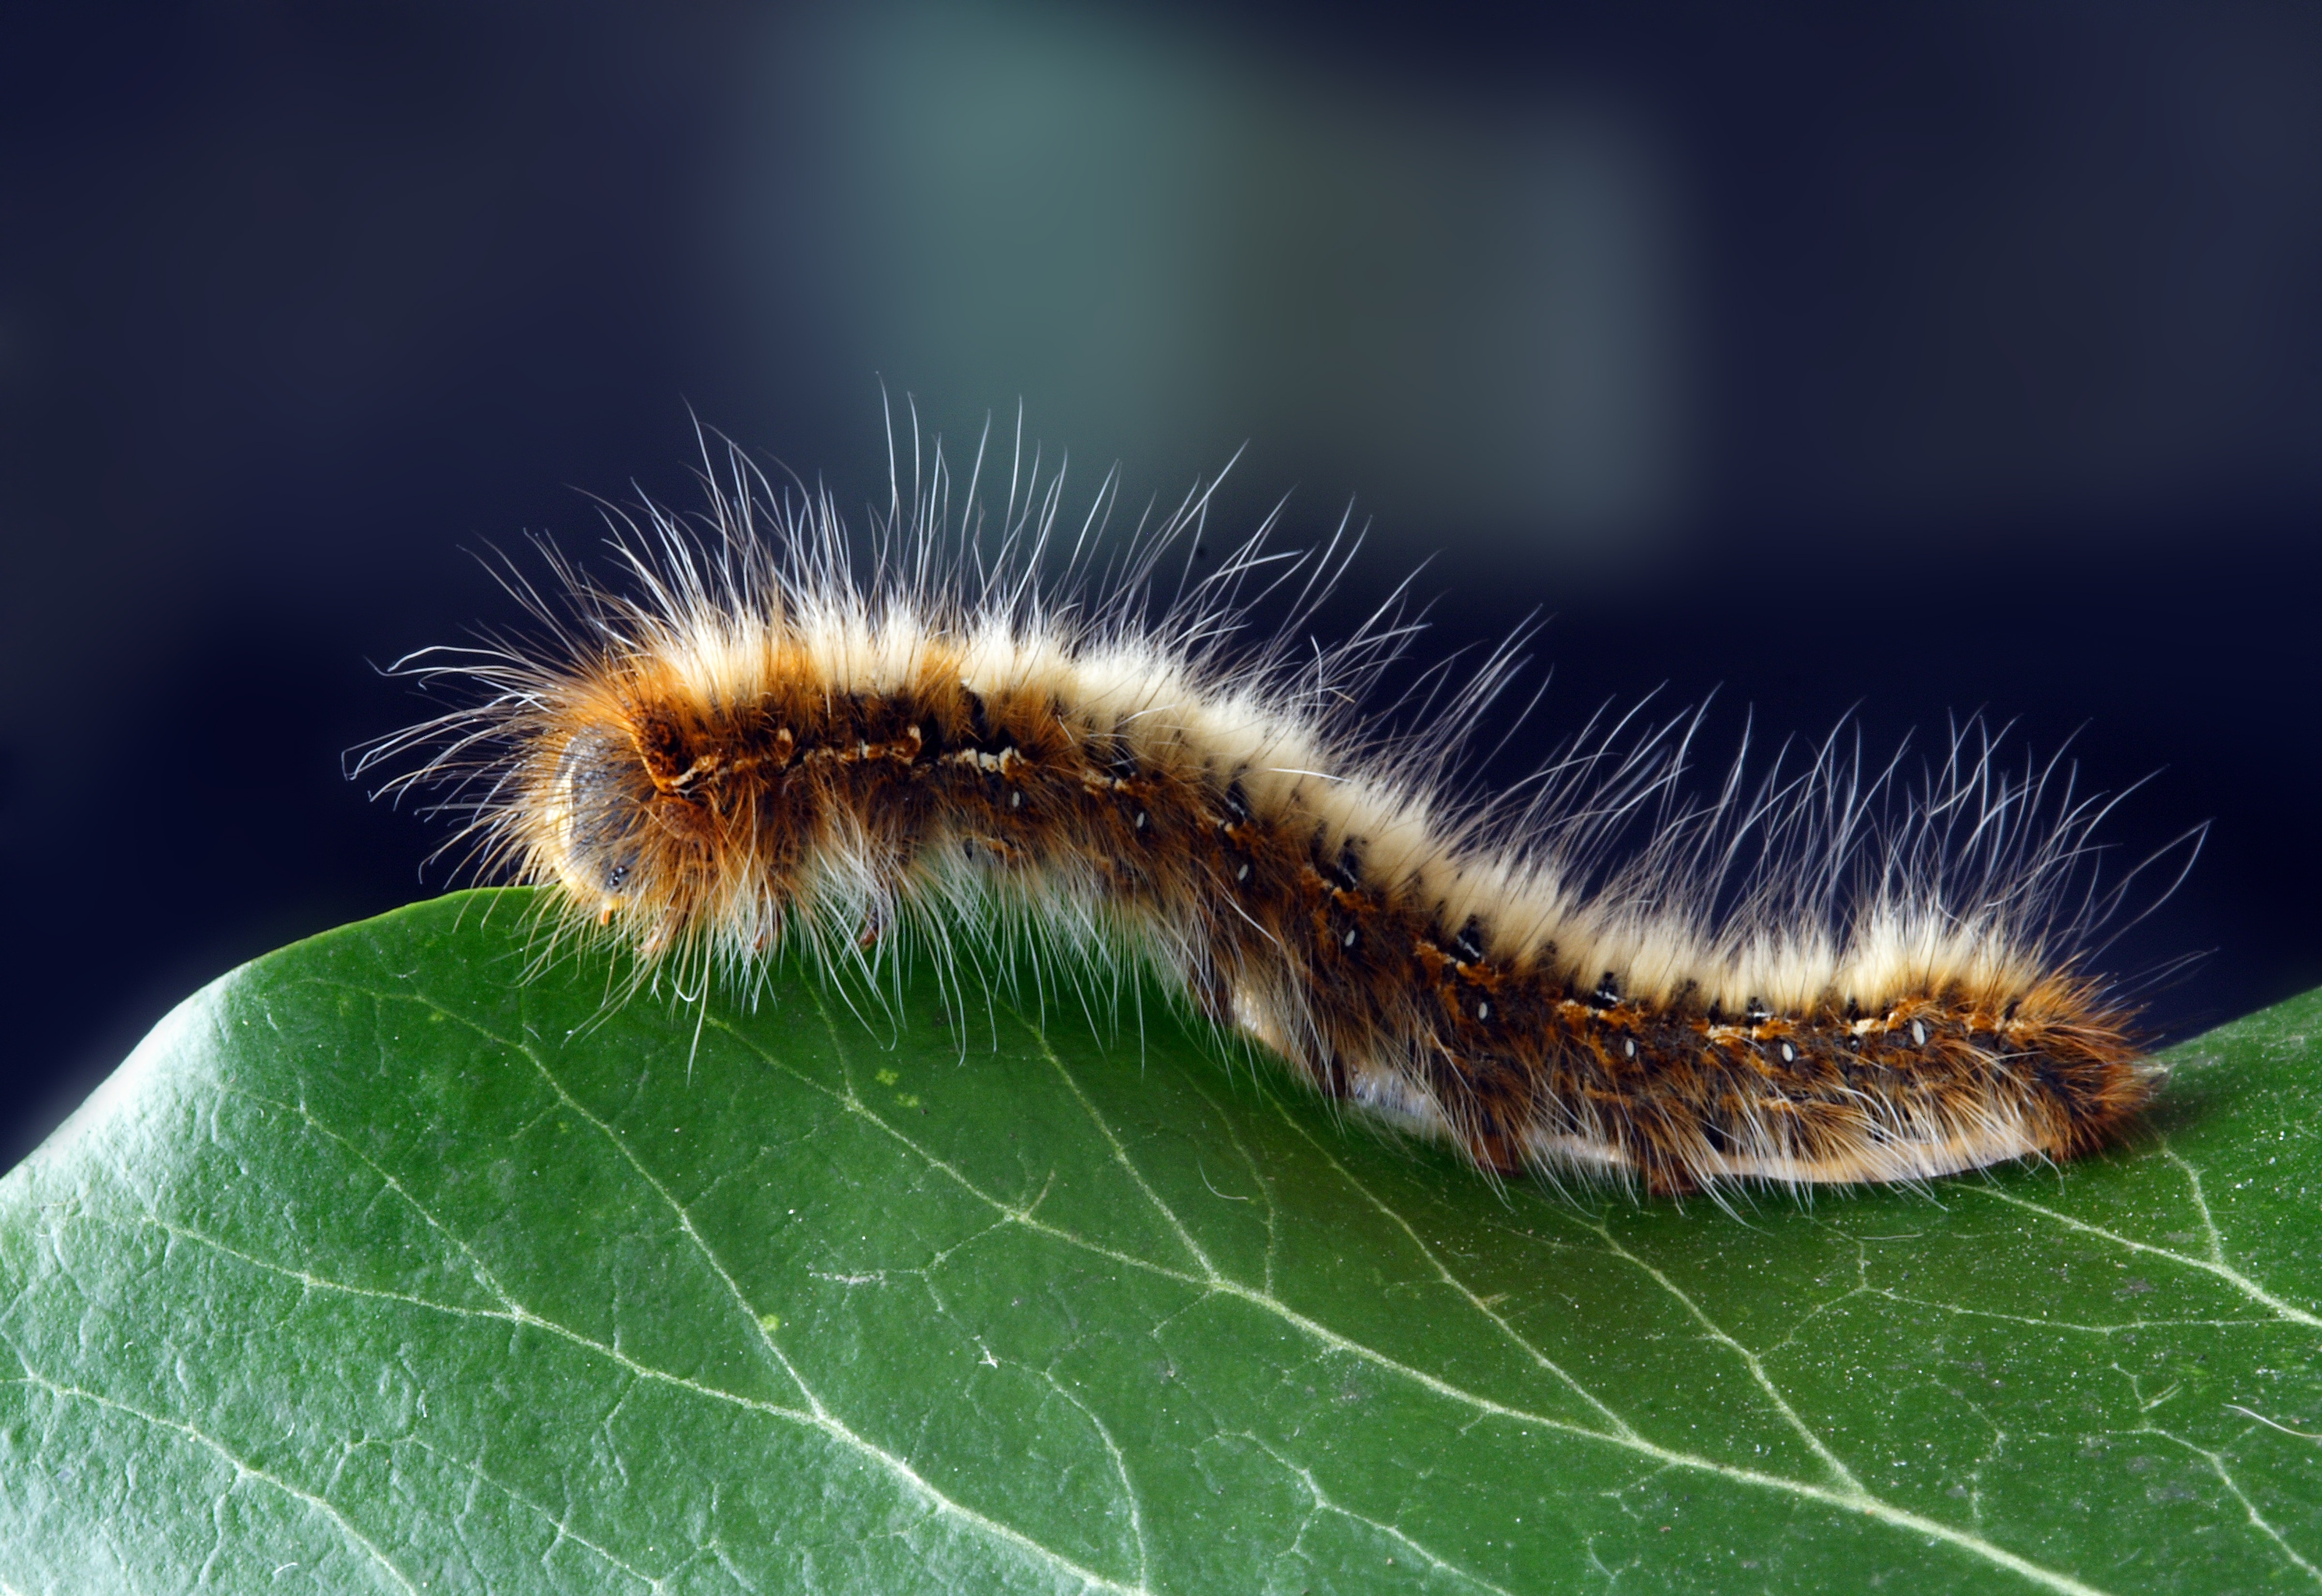 Download Original Image Online Crop - Caterpillar Insect , HD Wallpaper & Backgrounds